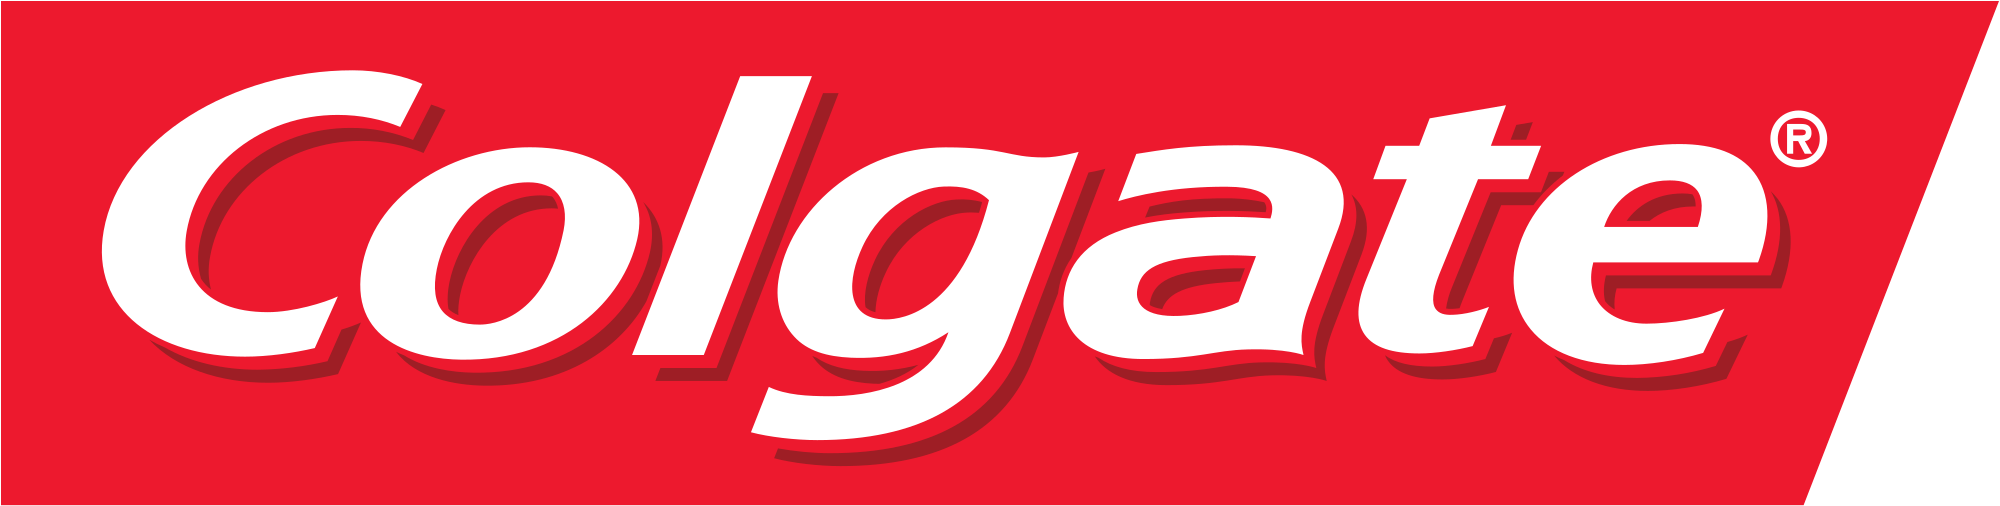 Colgate Logo - Colgate logo red.svg